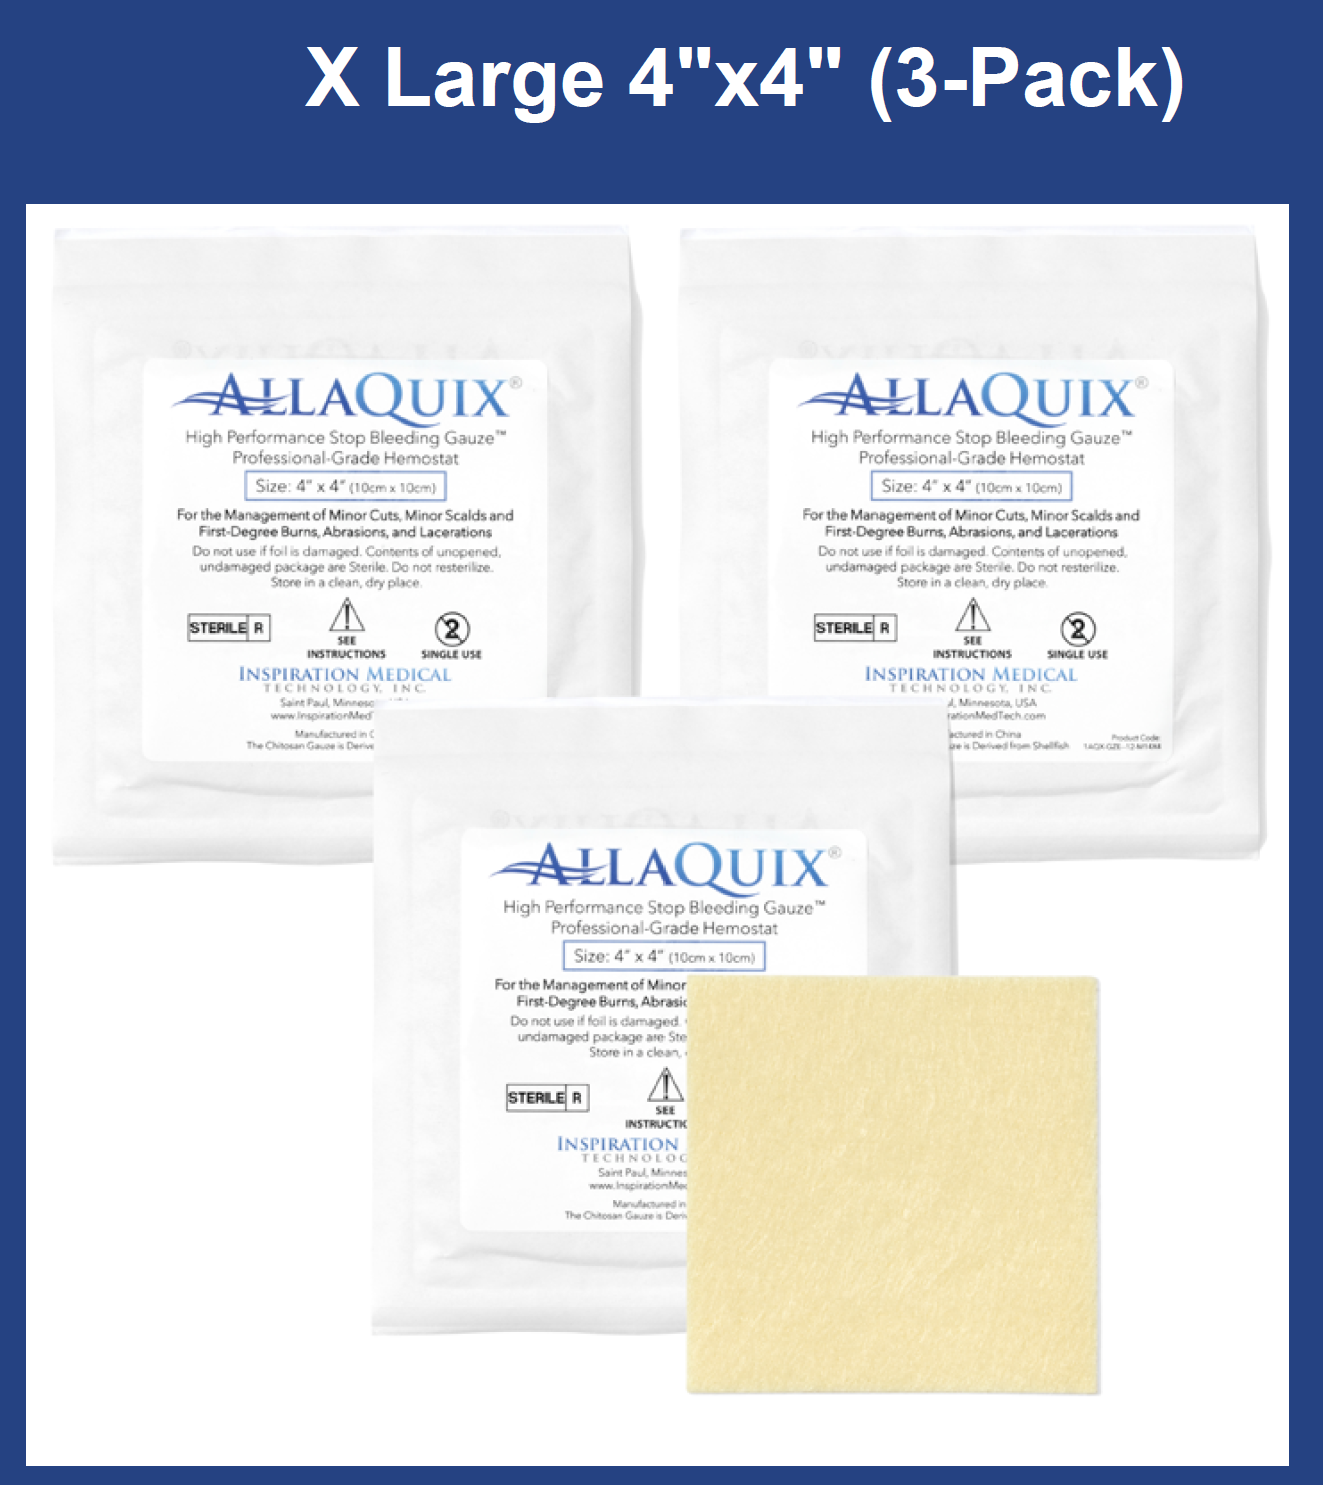 AllaQuix High Performance Stop Bleeding Gauze